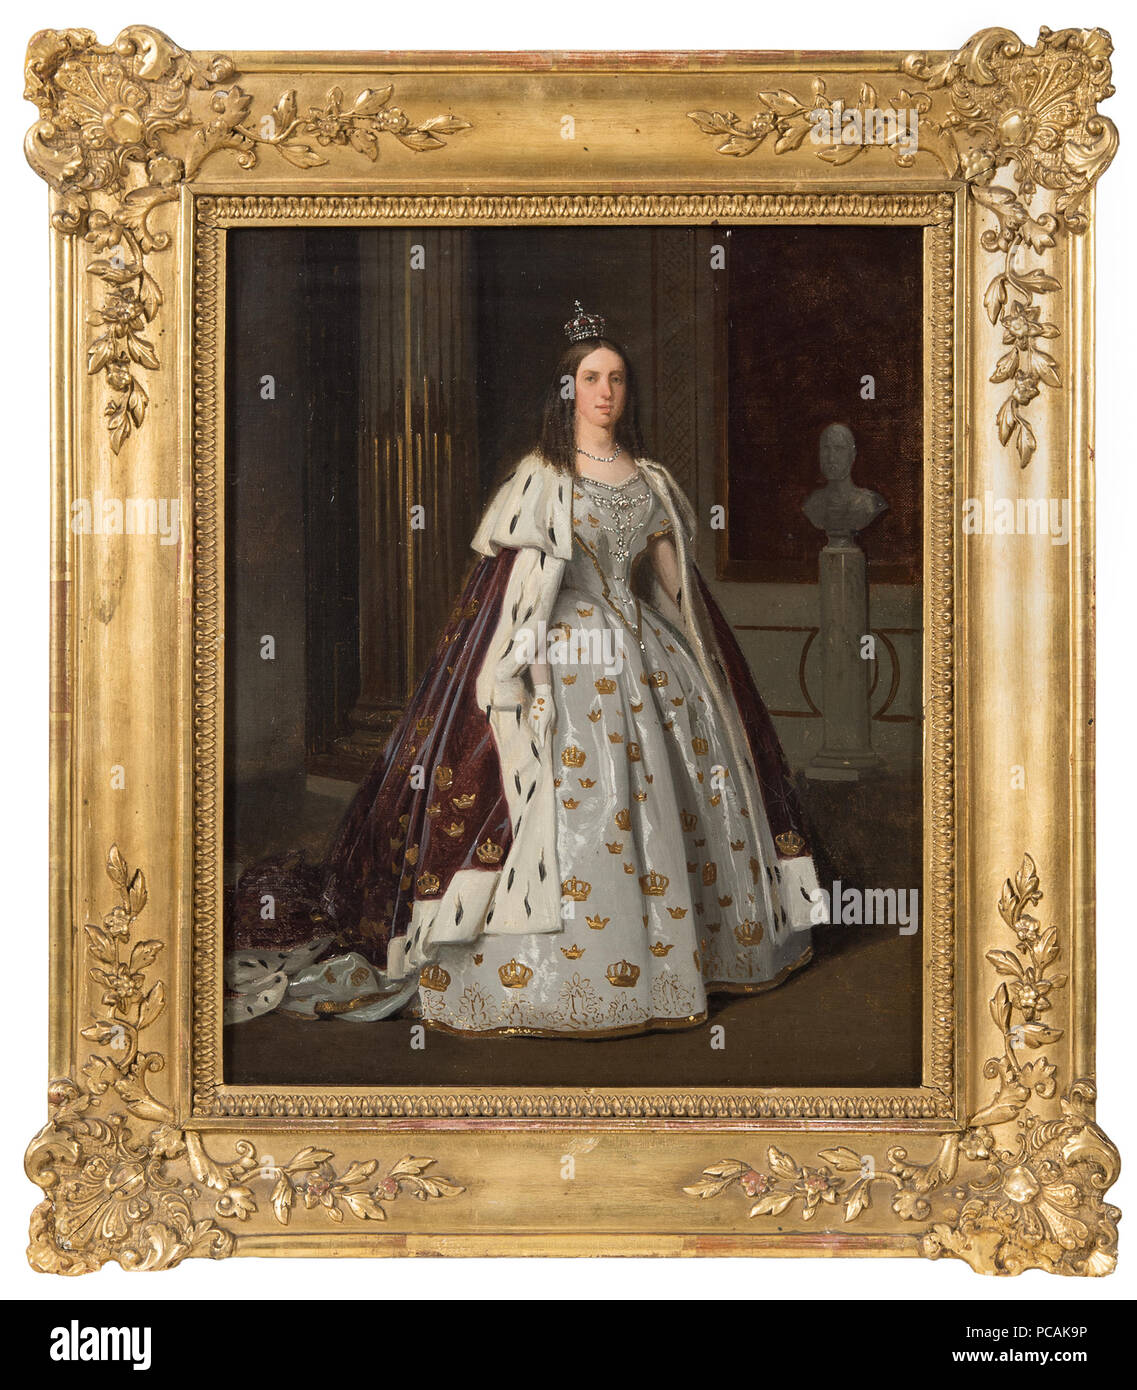 58 Lovisa, 1828-1871, drottning, une medkung Karl XV (Carl Stefan Bennett) - Nationalmuseum - 39165 Banque D'Images